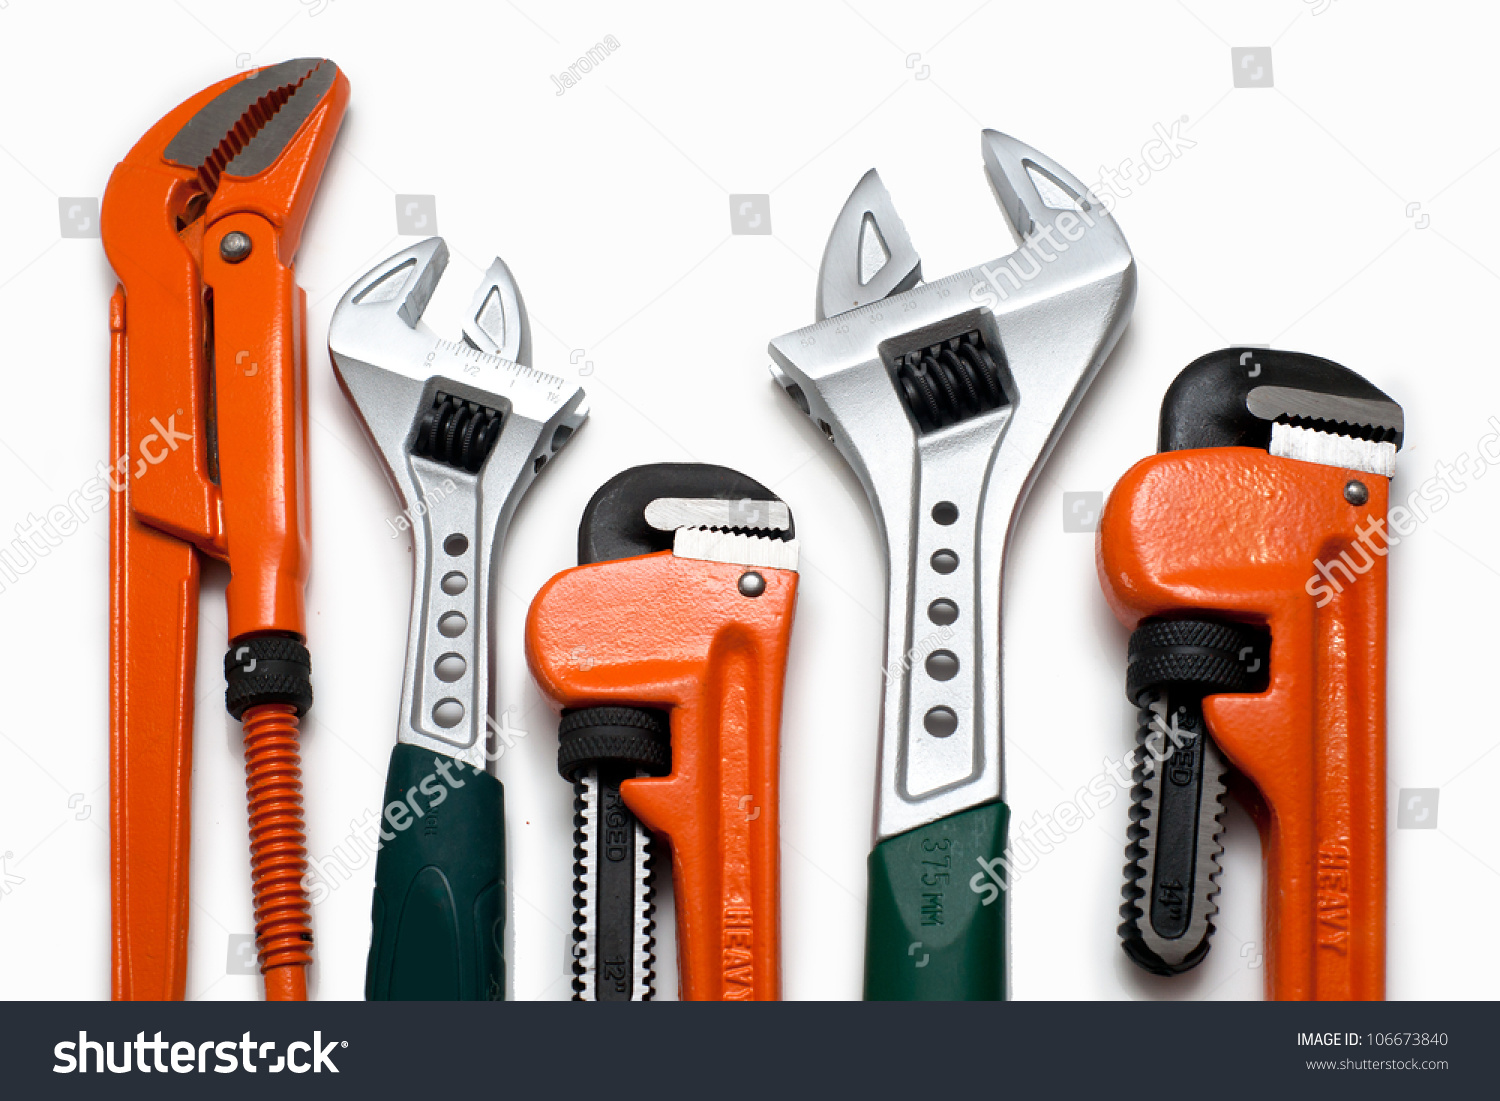 Plumbing Tools Set Stock Photo 106673840 - Shutterstock